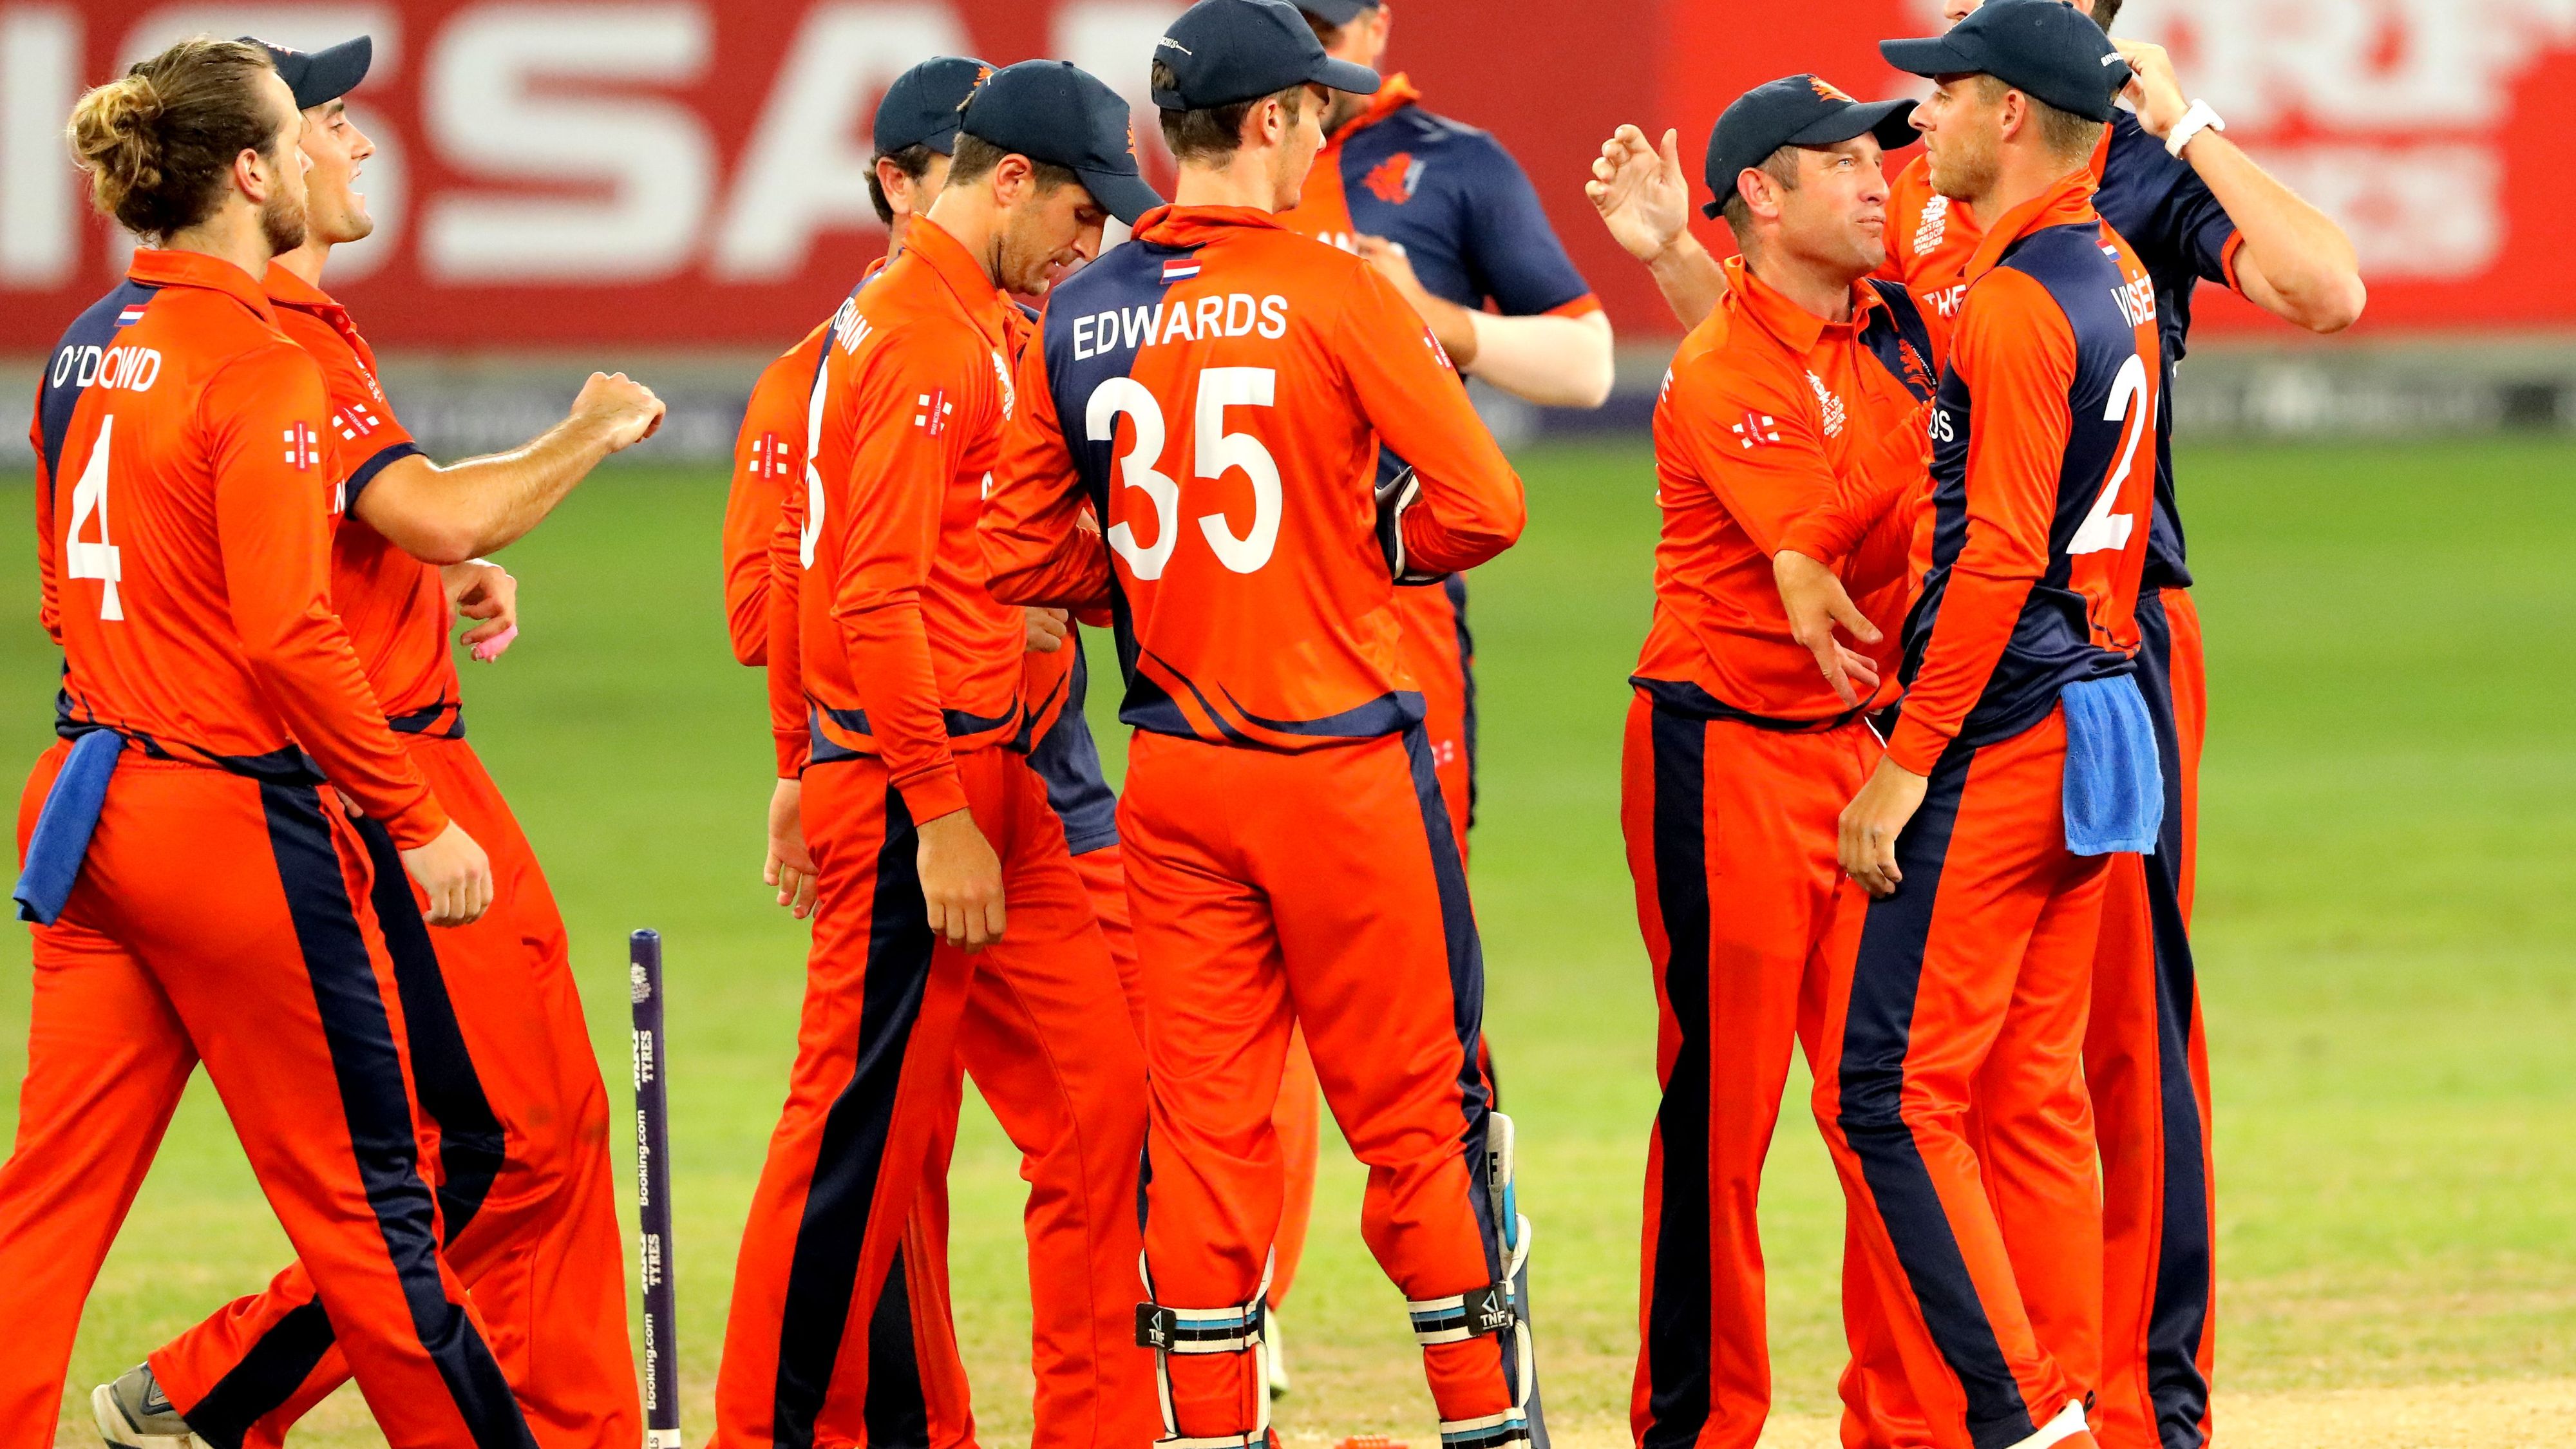 Six changes in Netherlands squad for Centurion - Emerging Cricket